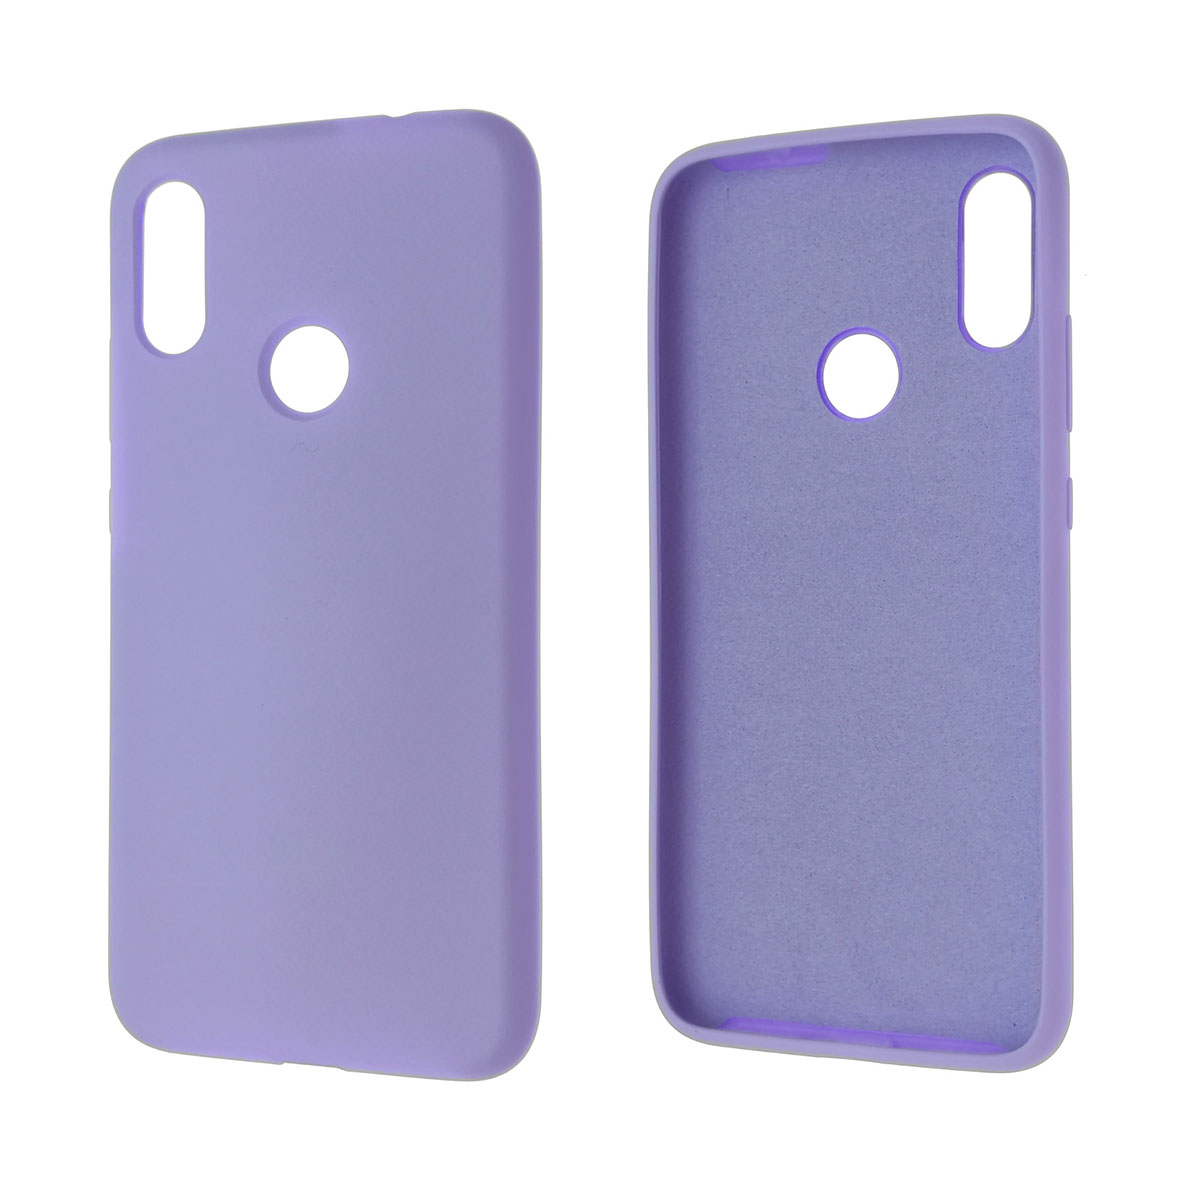 Чехол накладка Silicon Cover для XIAOMI Redmi Note 7, силикон, бархат, цвет сиреневый.